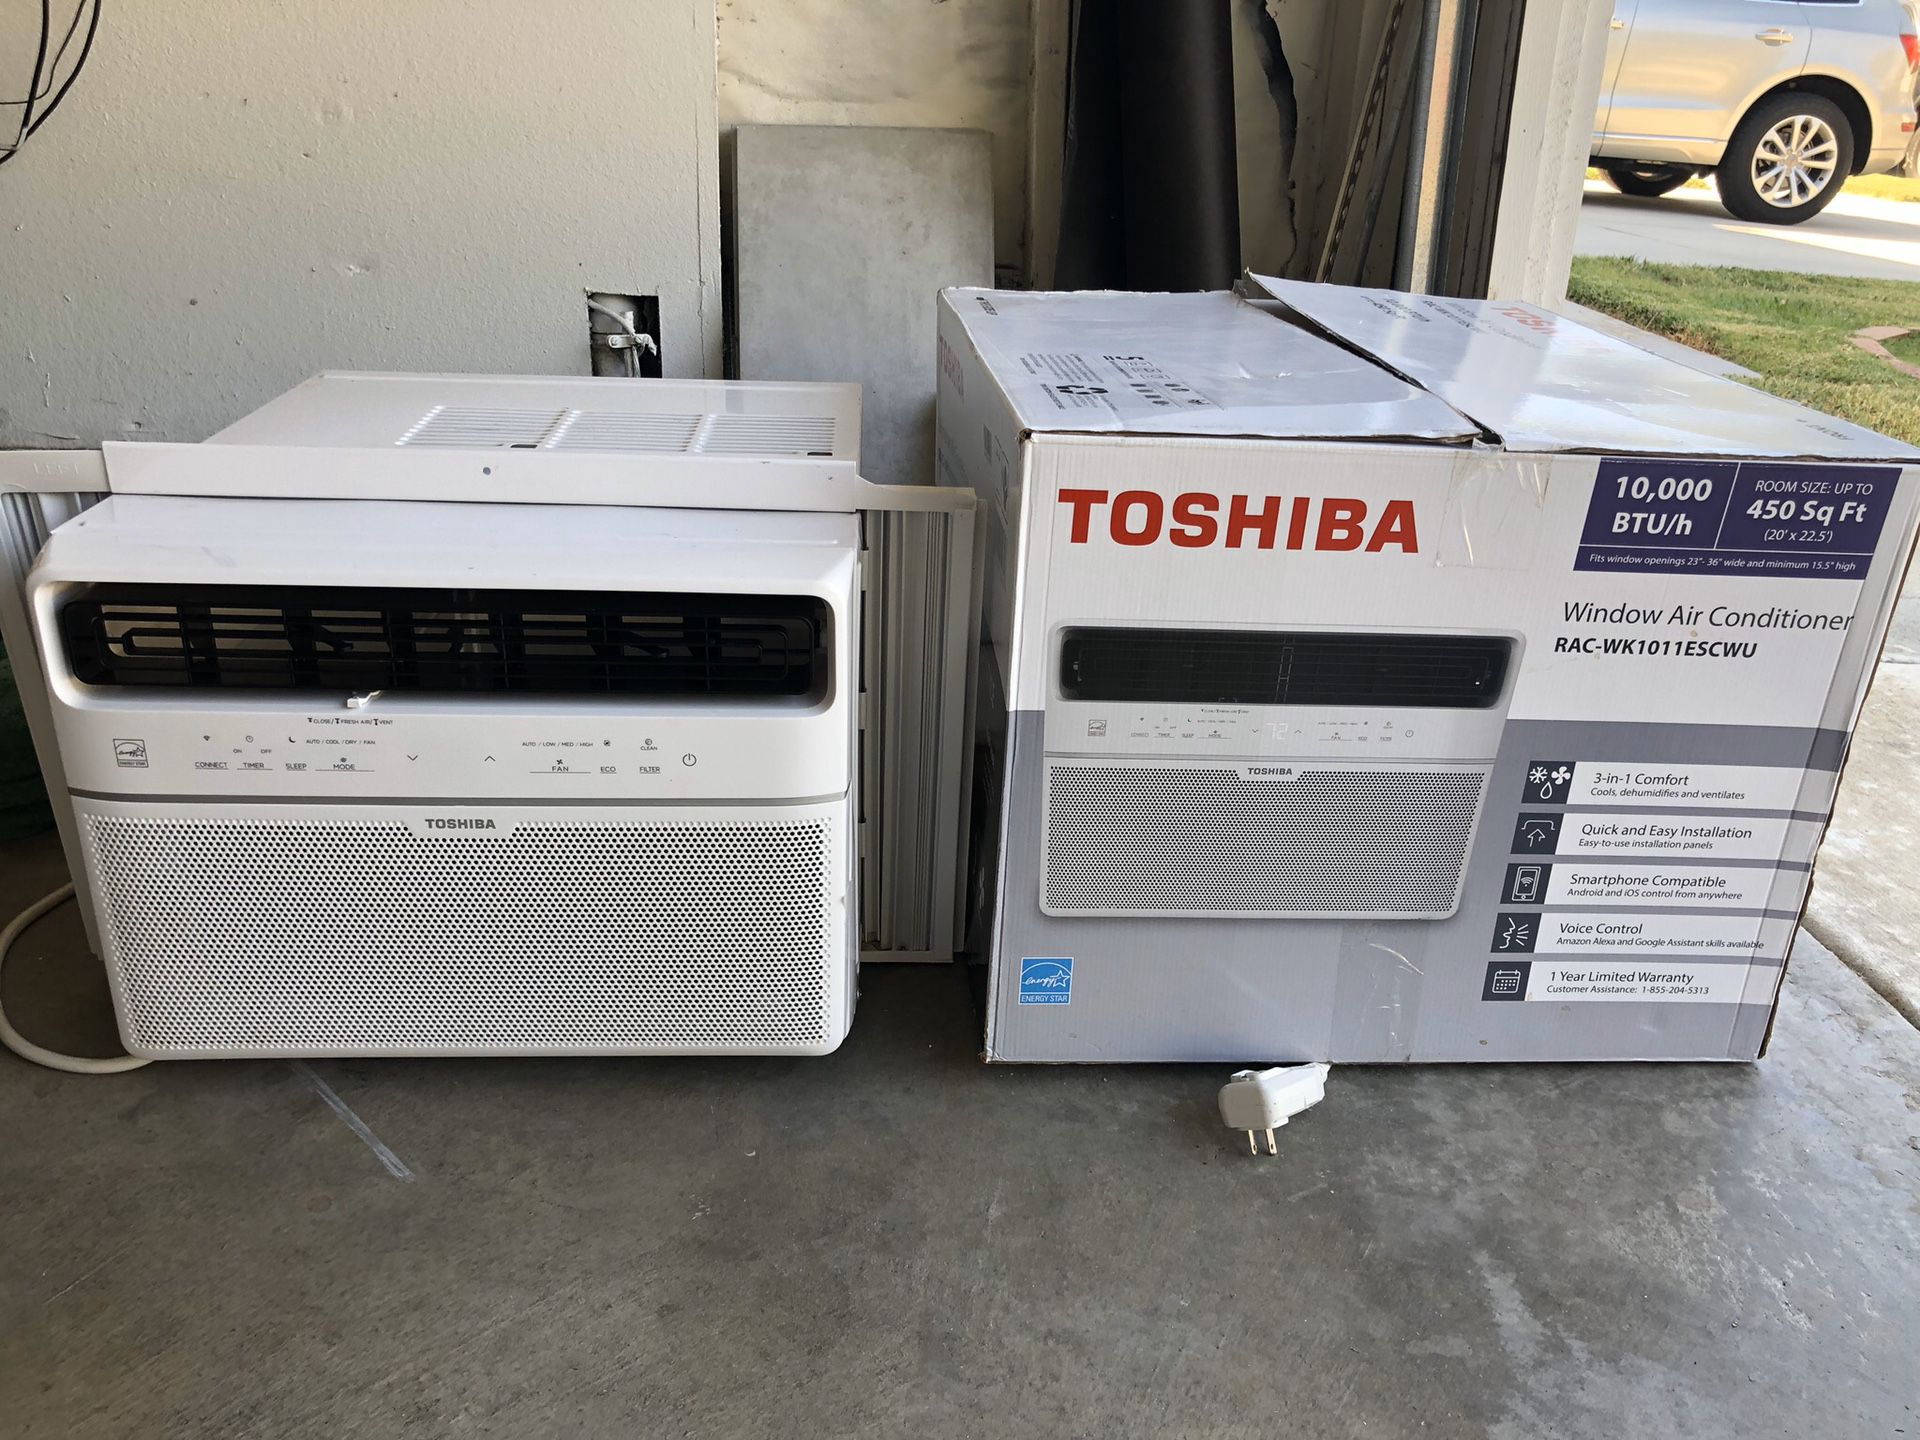 Toshiba window air conditioner